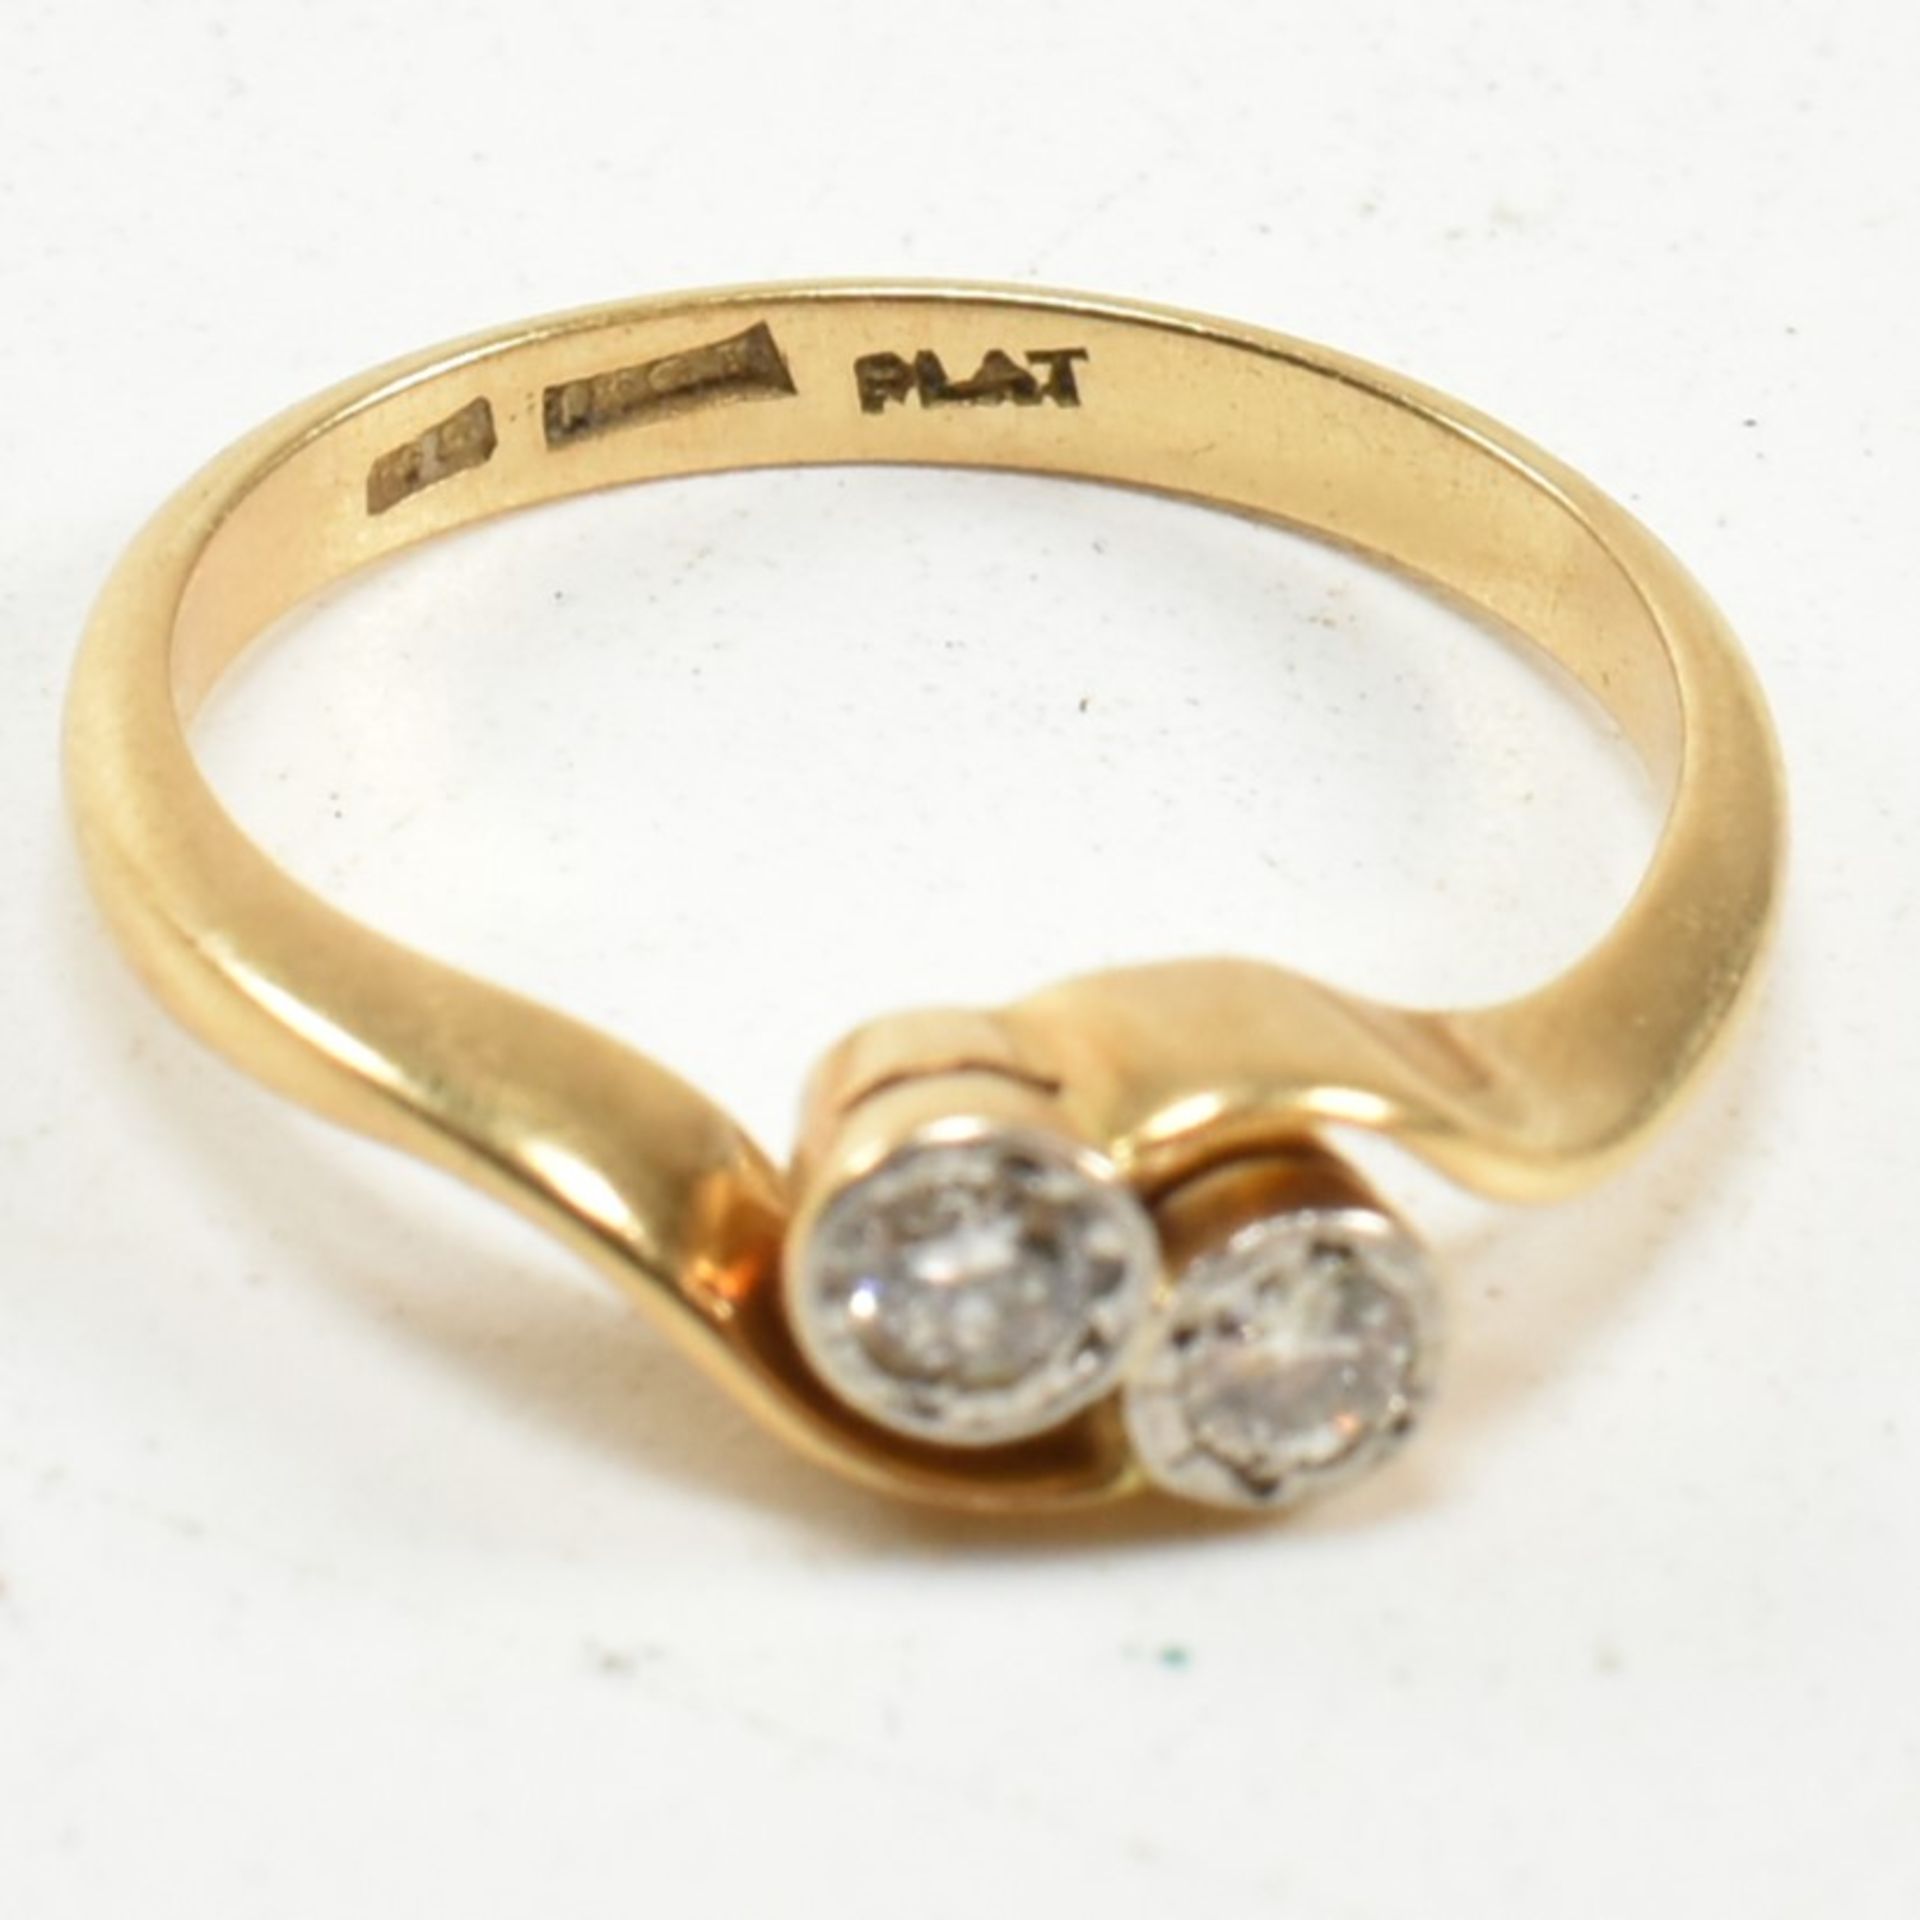 CASED 18CT GOLD PLATINUM & DIAMOND CROSSOVER RING - Image 7 of 8